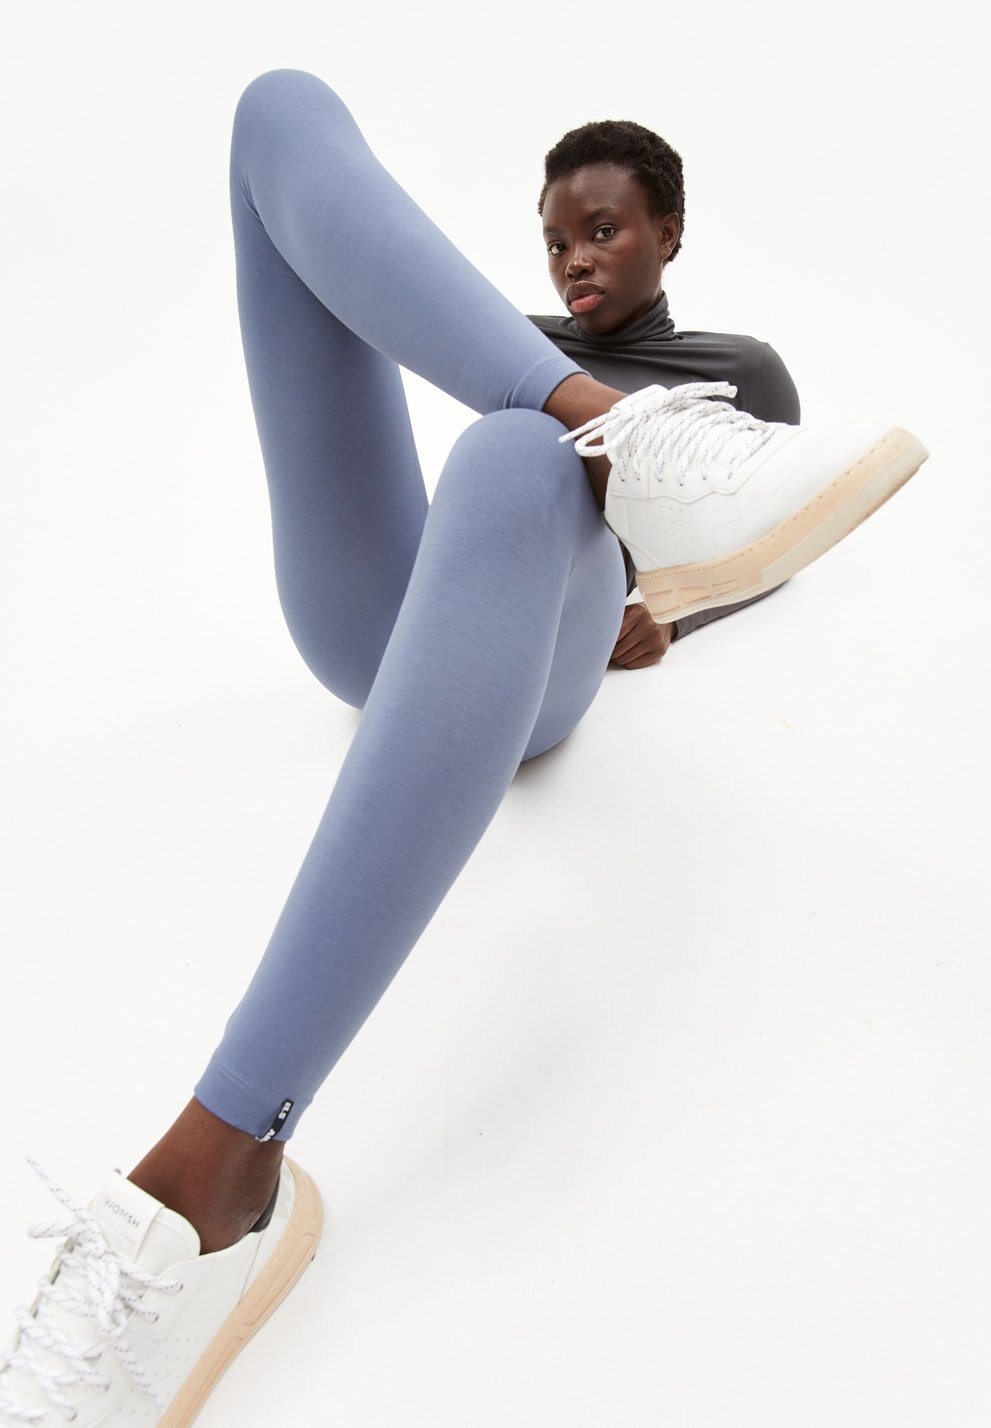 Yoga Legging Pocket - Bio Blanc - Vêtements de yoga Femme - Coton